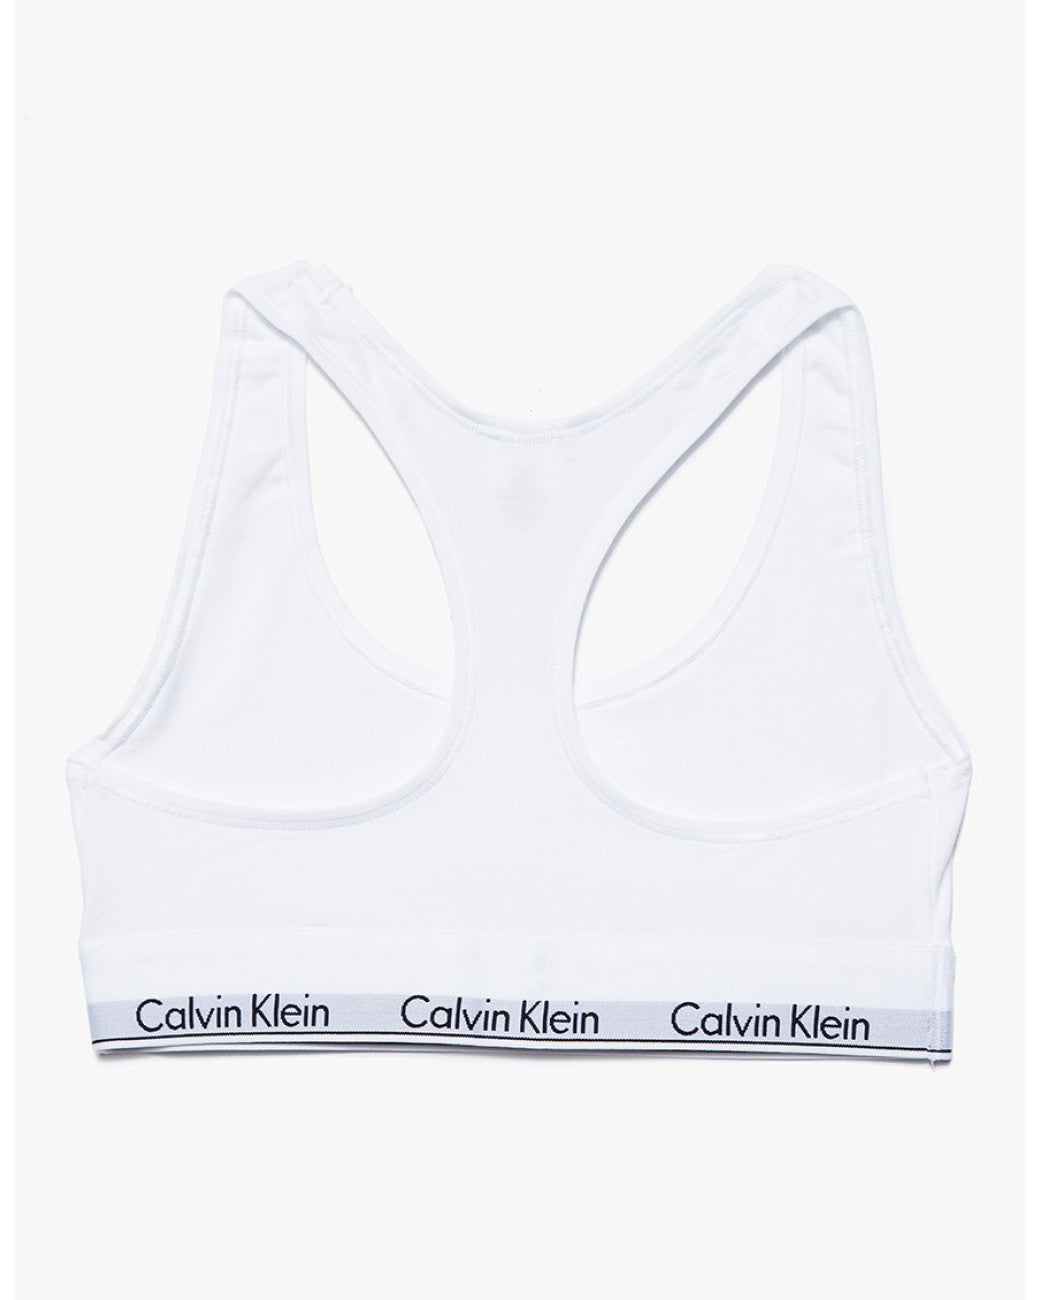 Calvin Klein Women's Modern Cotton Bralette, White, Large